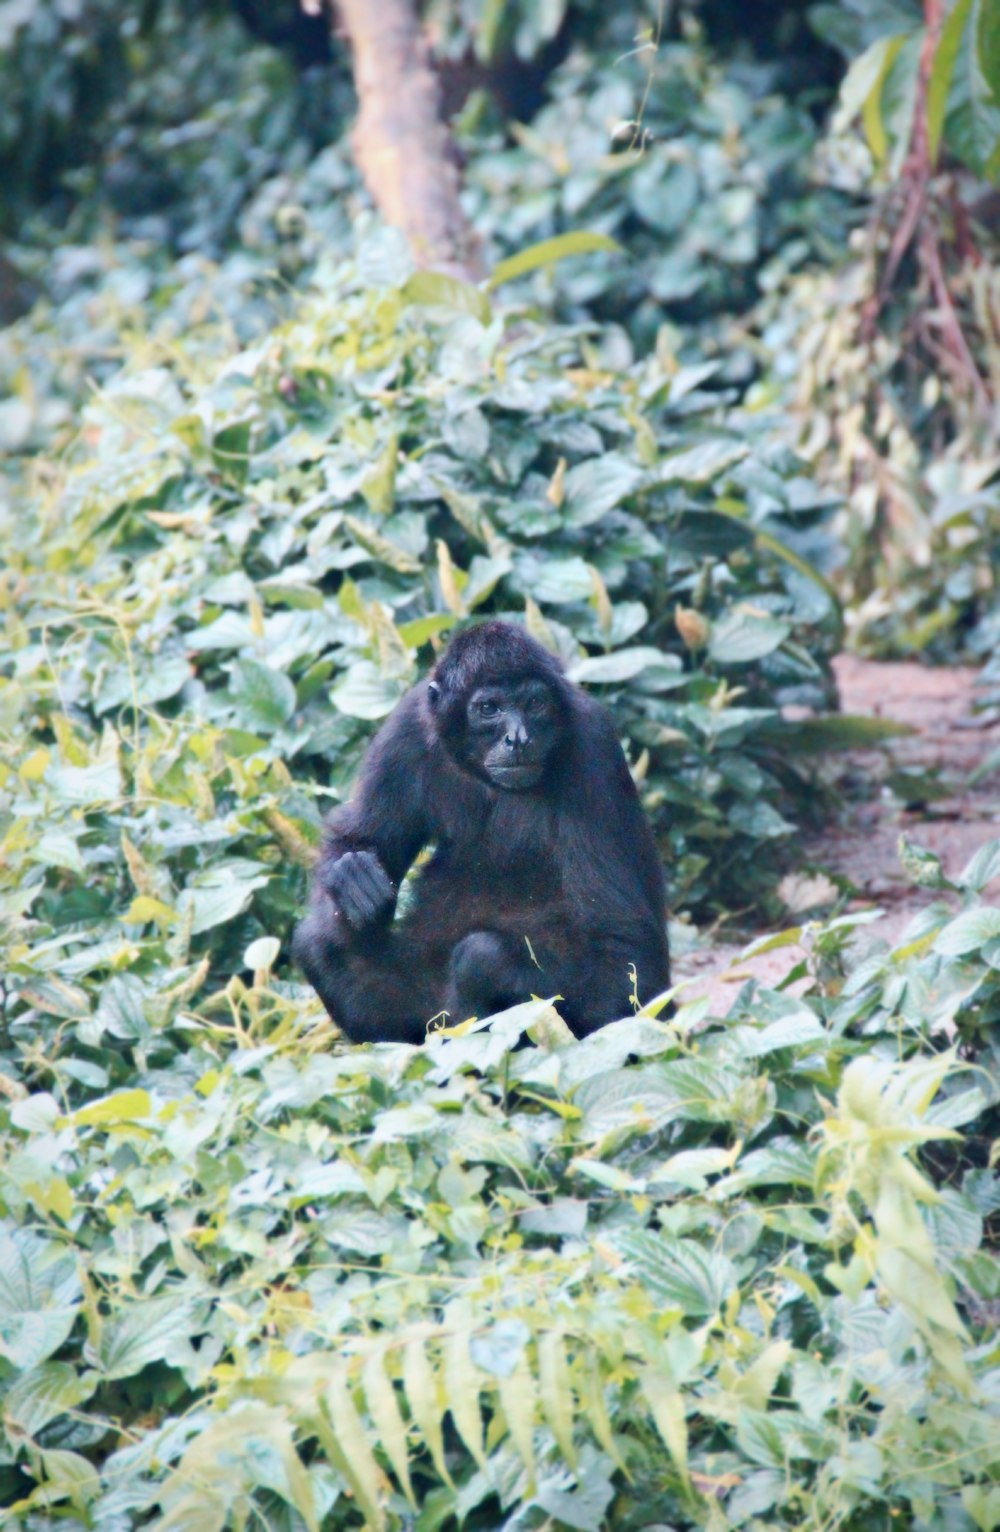 black gorilla on green grass during daytime